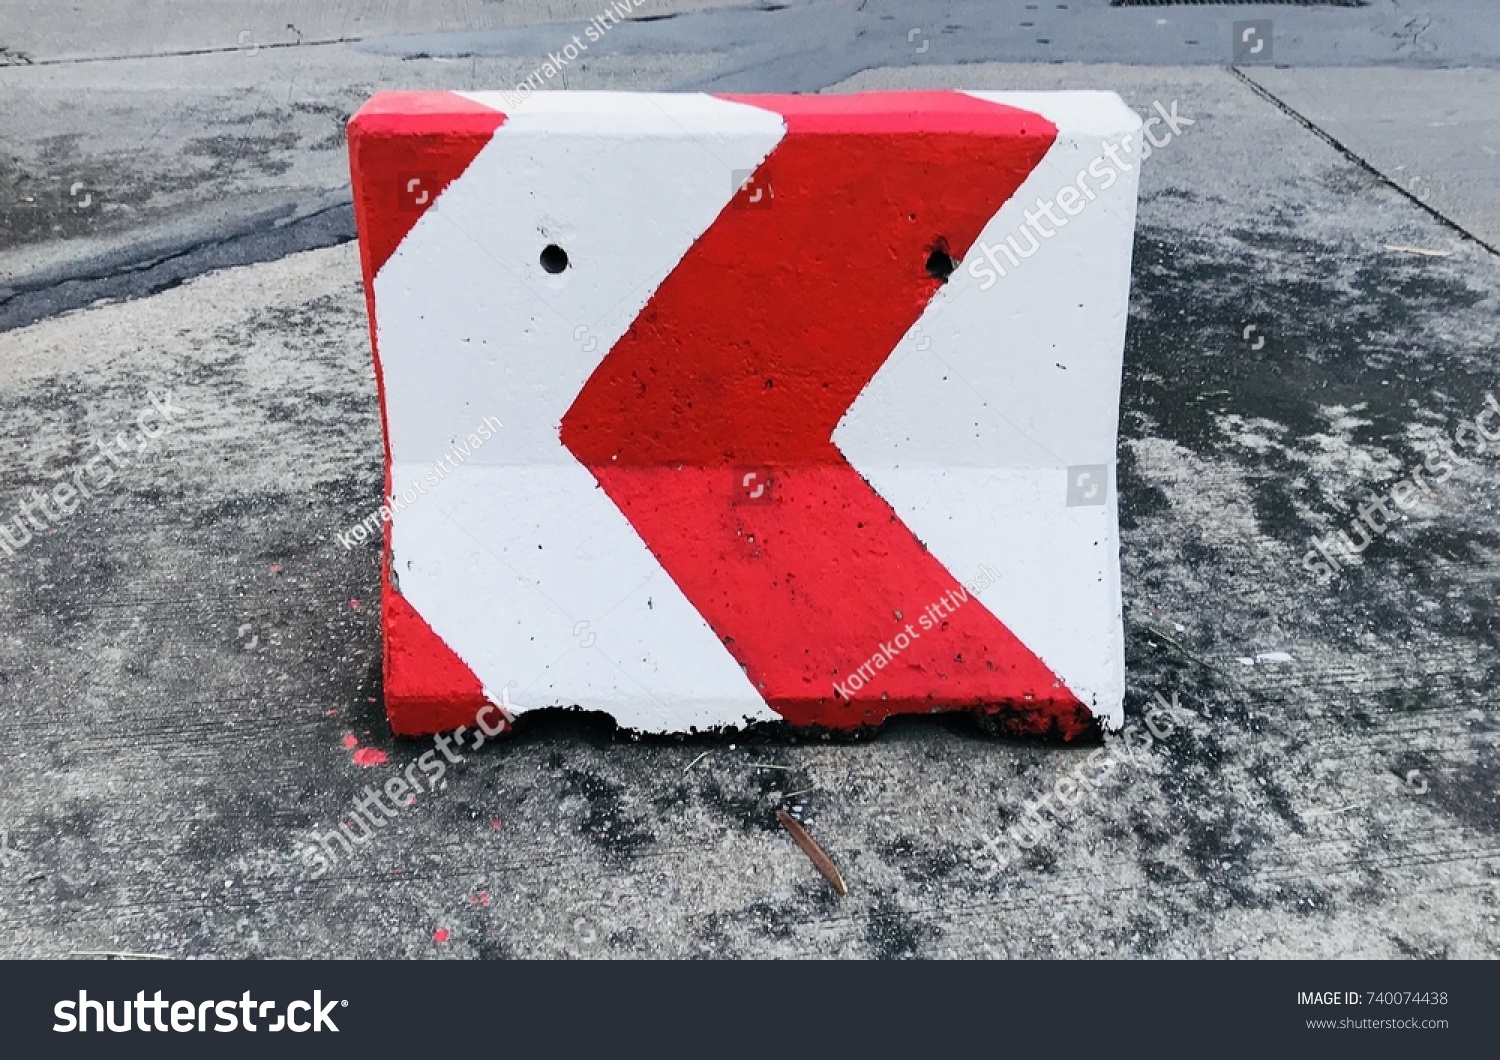 stock-photo-red-white-concrete-barrier-740074438.jpg